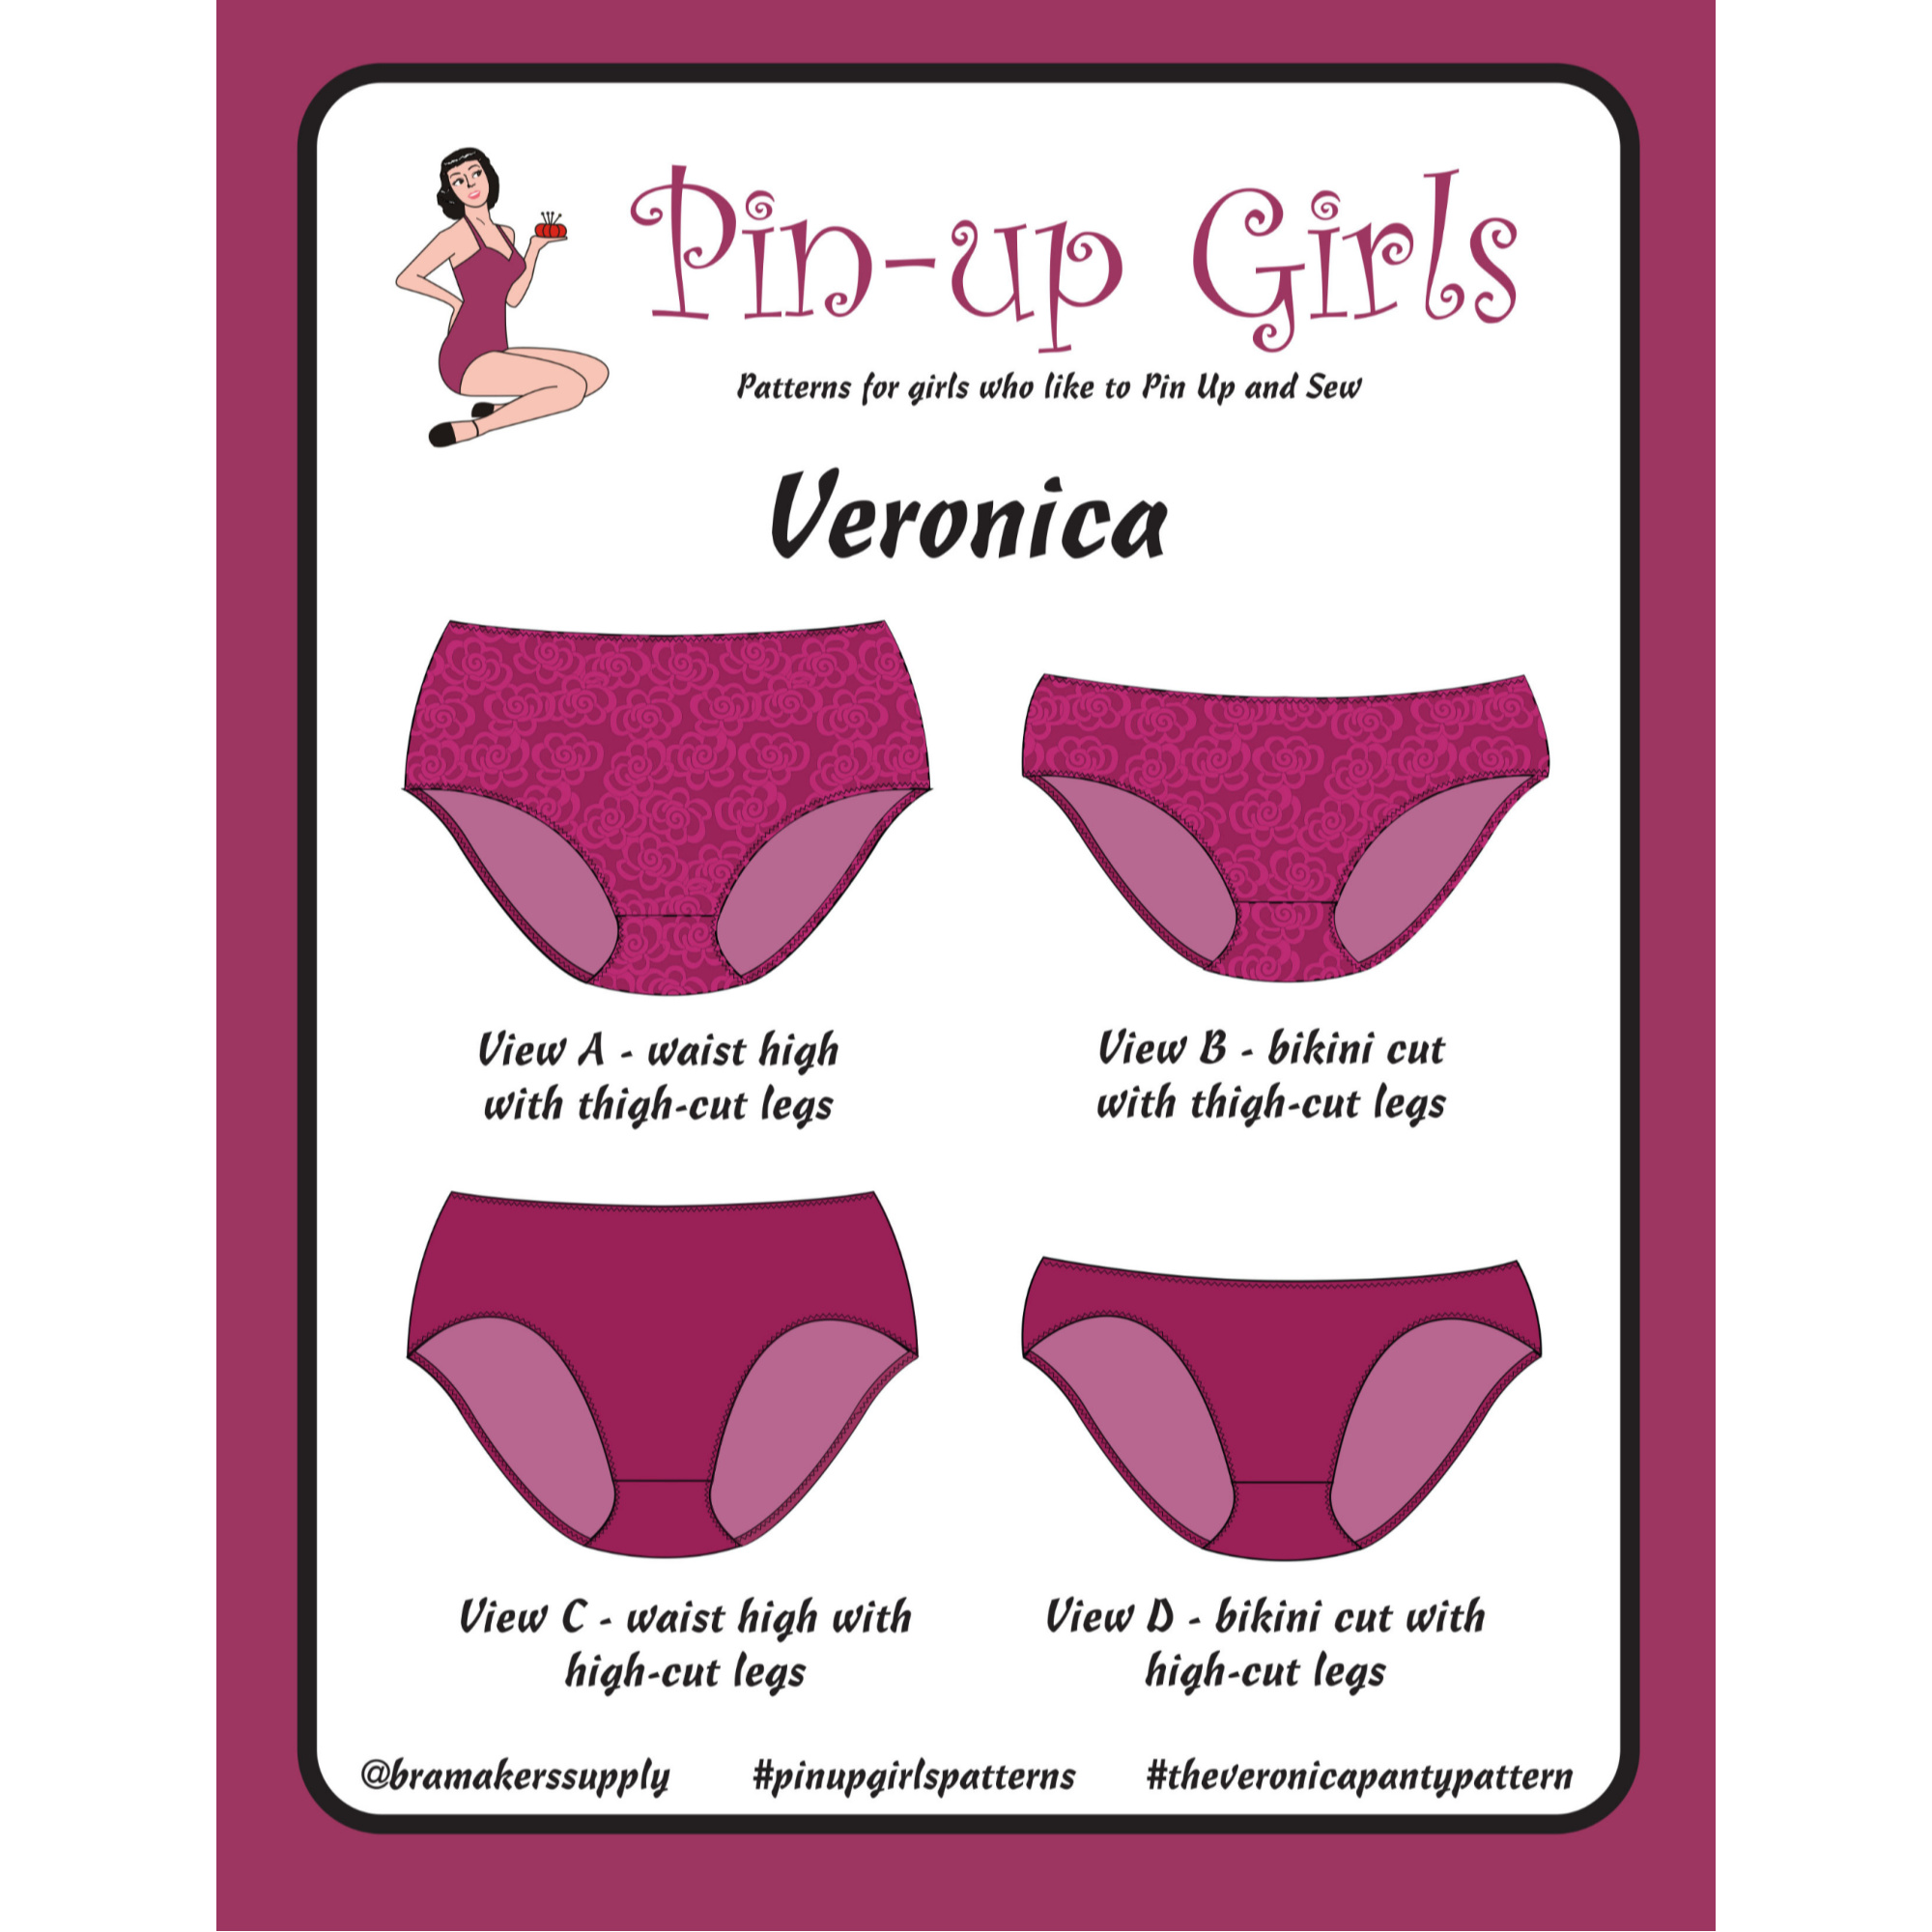 Pin-Up Girls: Boy Shorts Collection from CorsetMakingSupplies.com